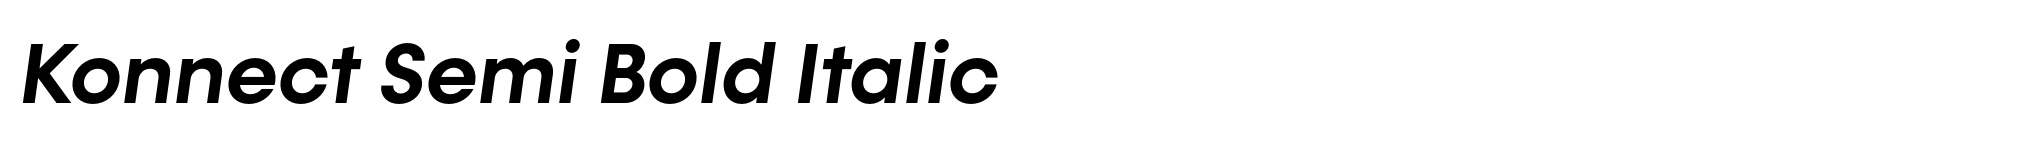 Konnect Semi Bold Italic image